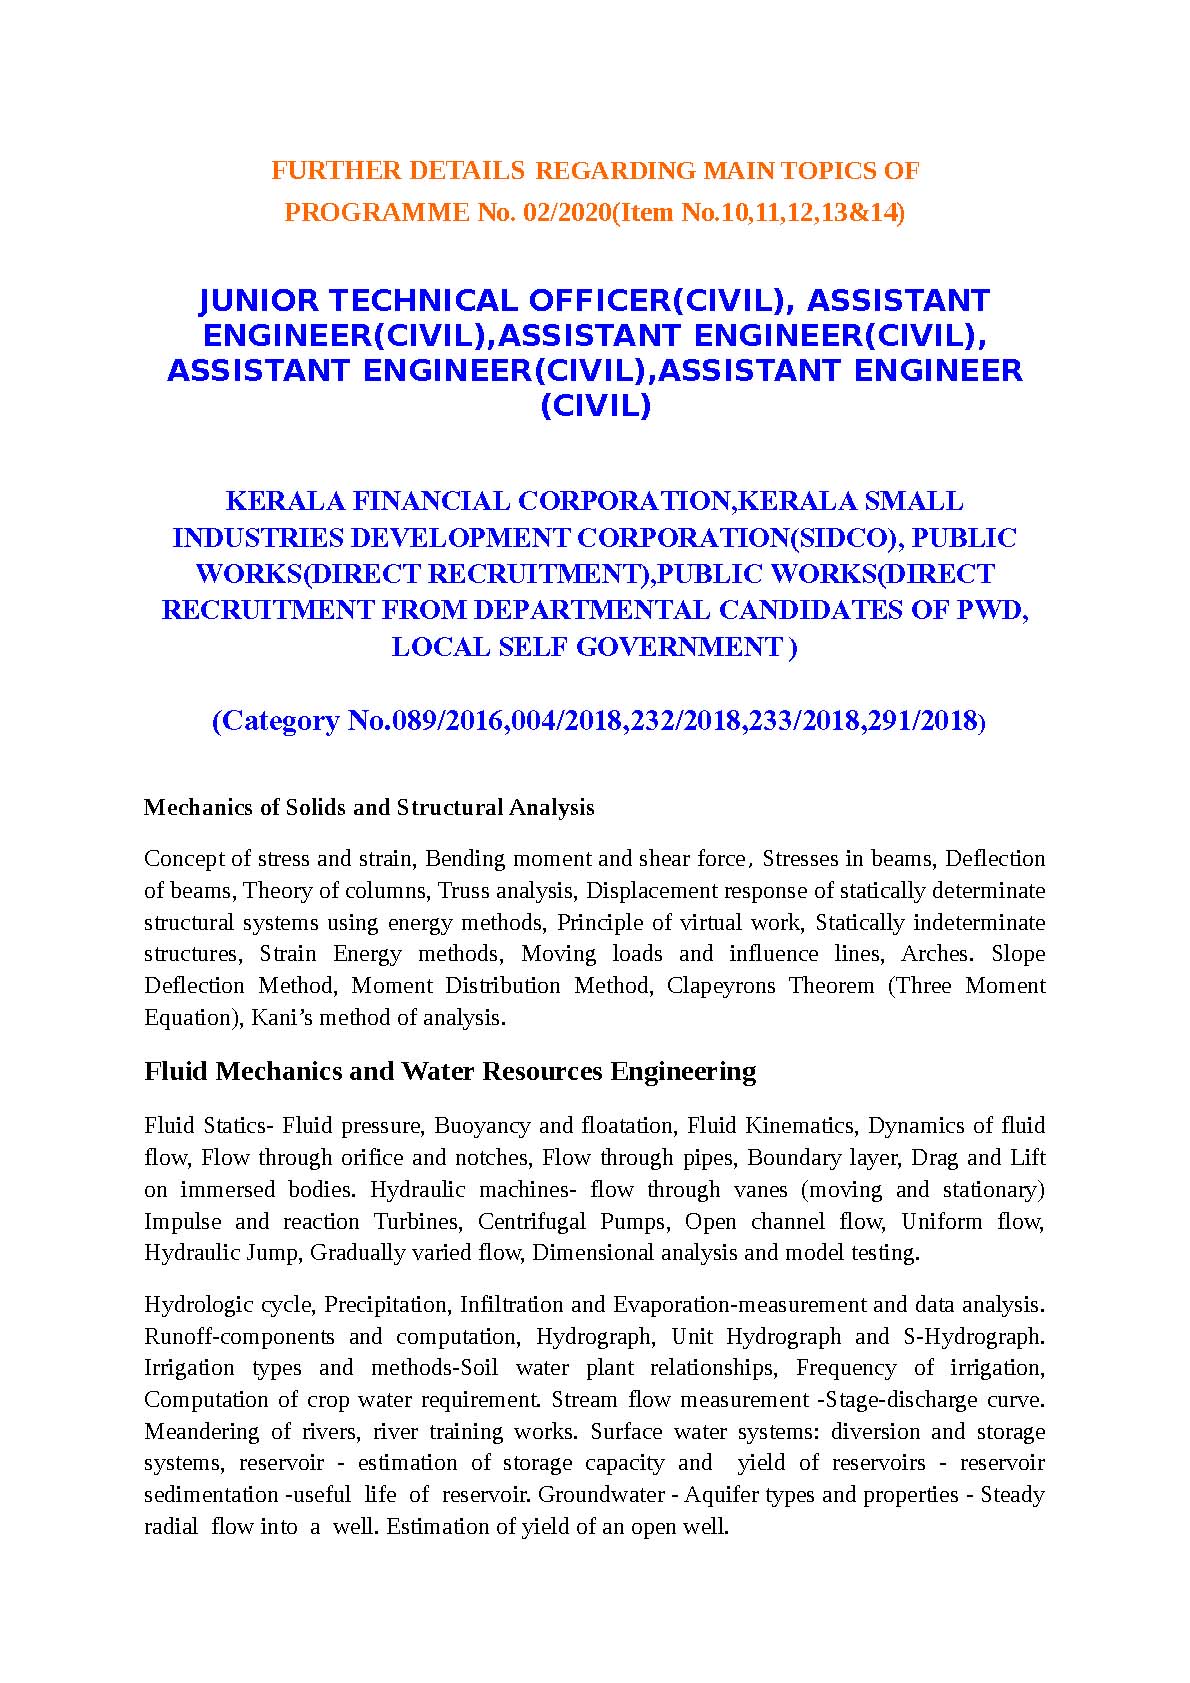 KPSC Junior Technical Officer Civil Exam Syllabus - Notification Image 1